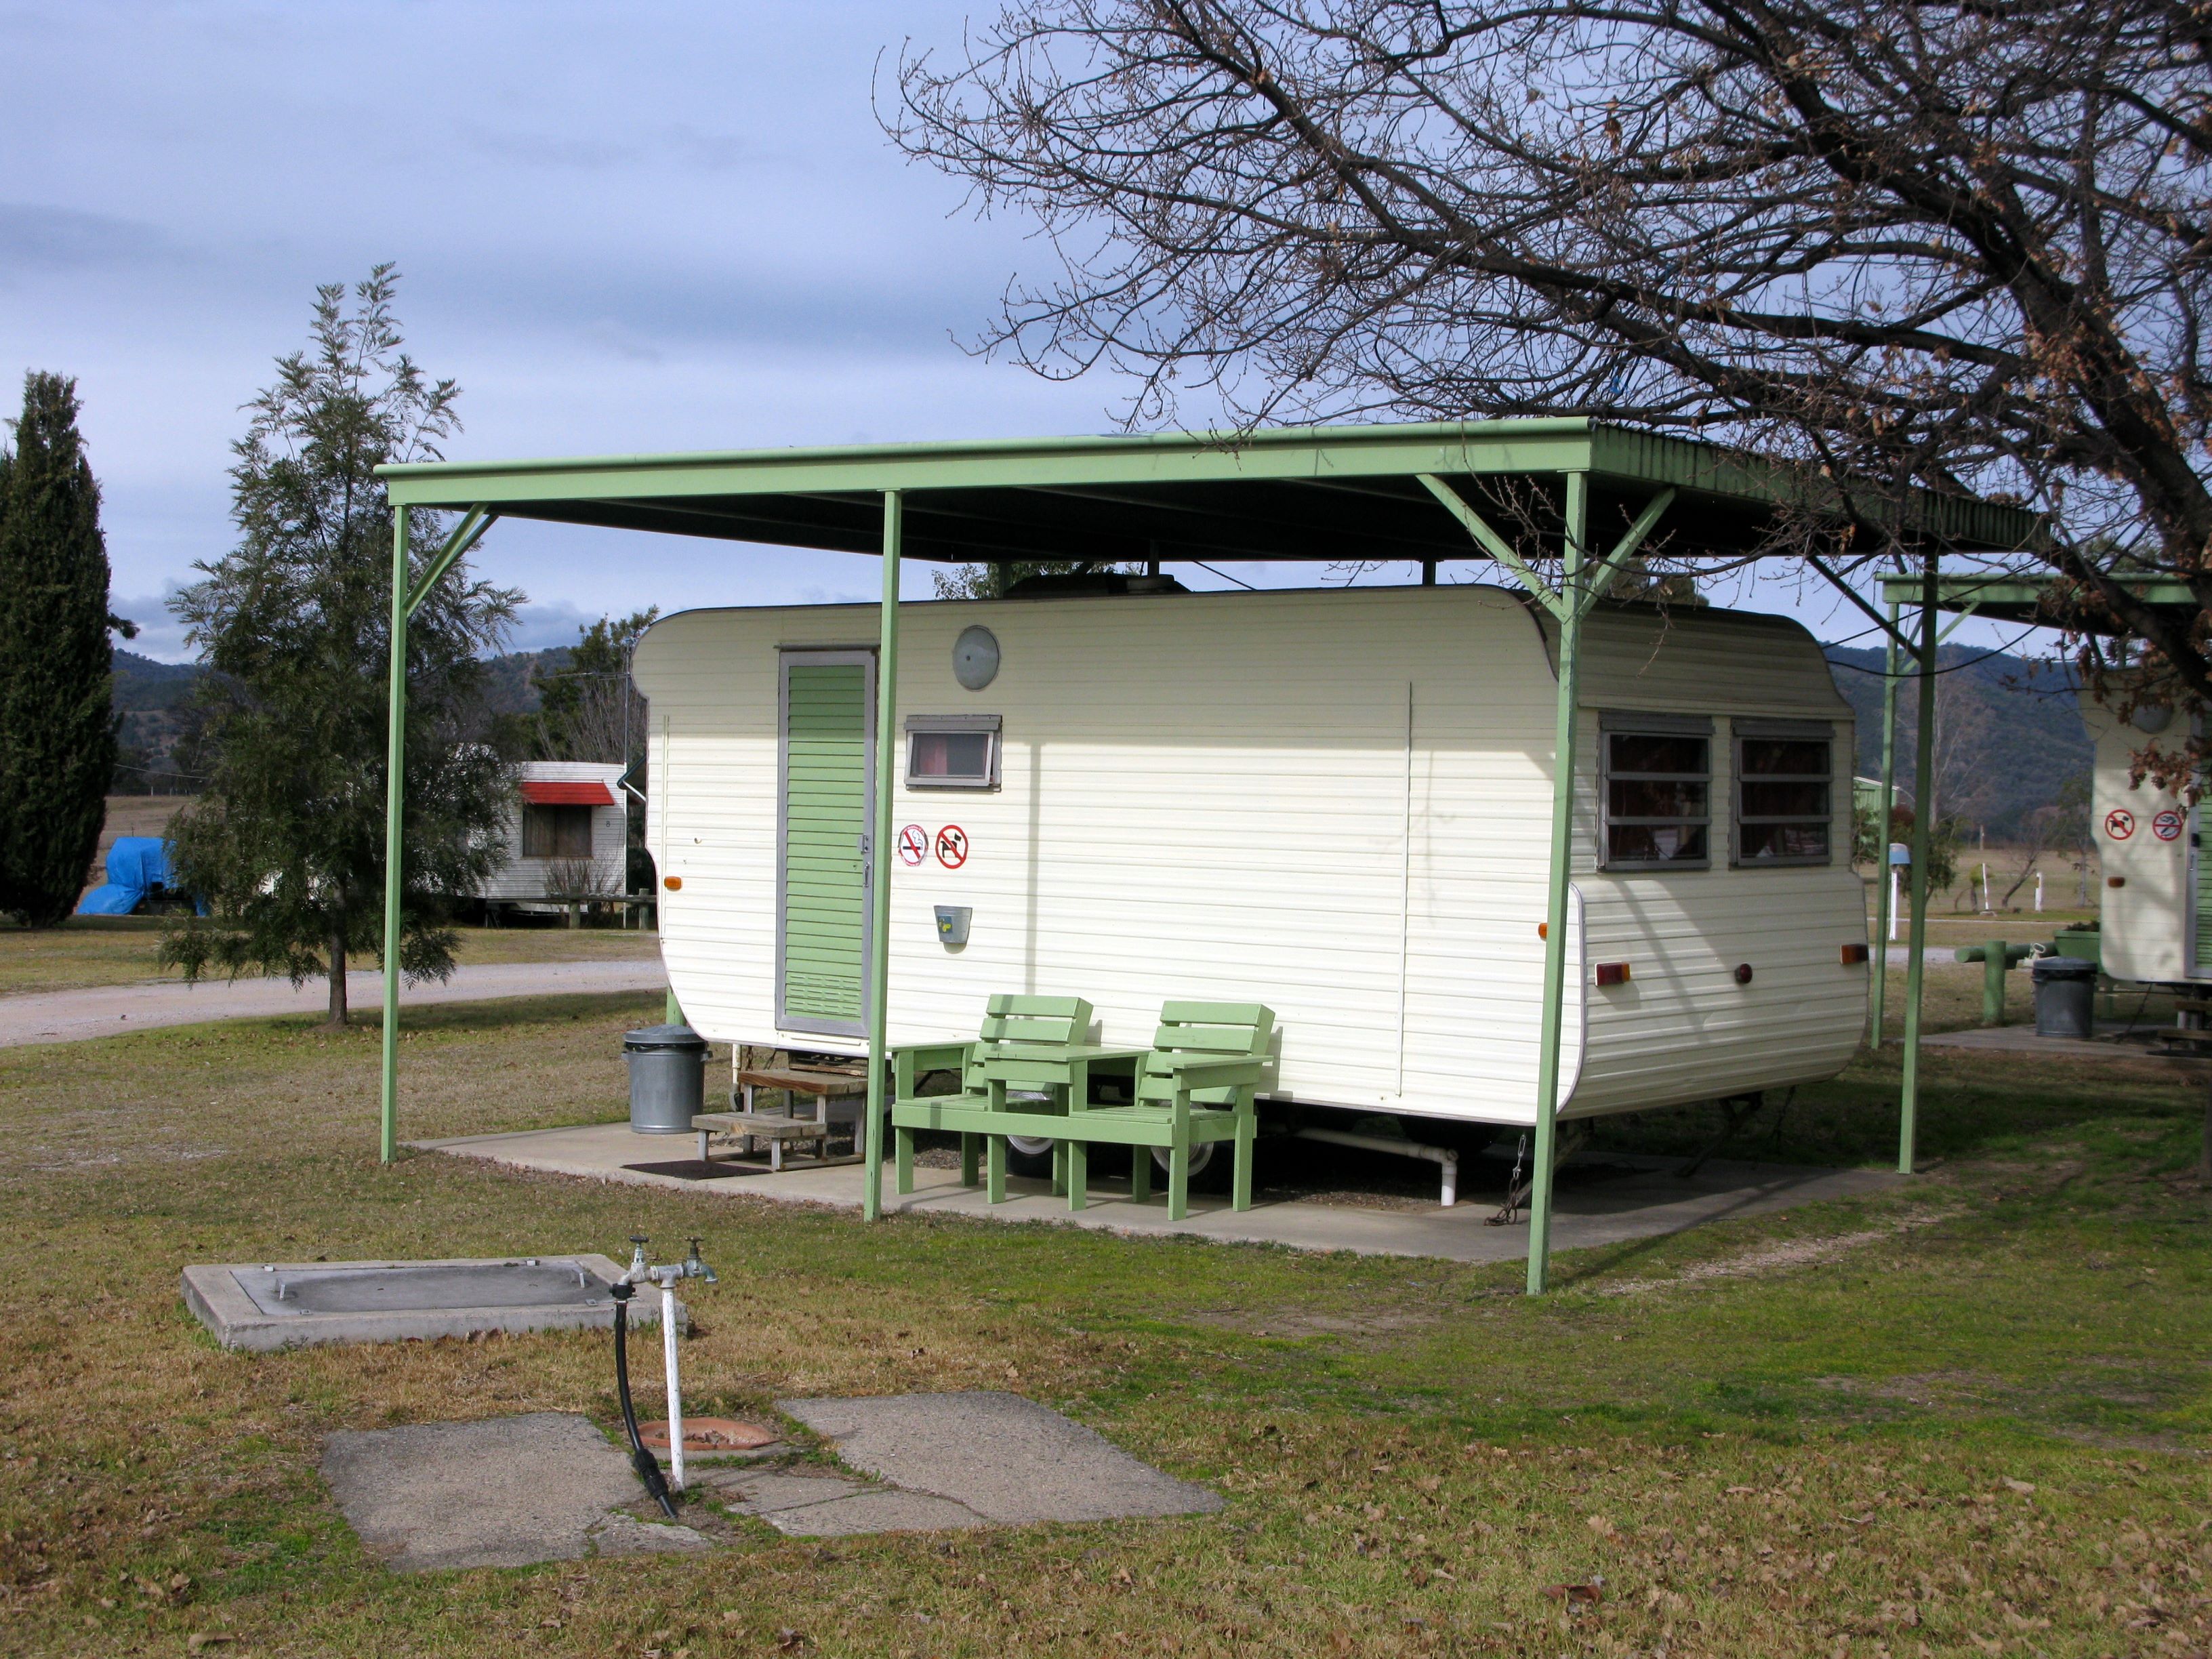 Kootingal Kourt Caravan Park - Kootingal: On site caravans for rent with roof covering.